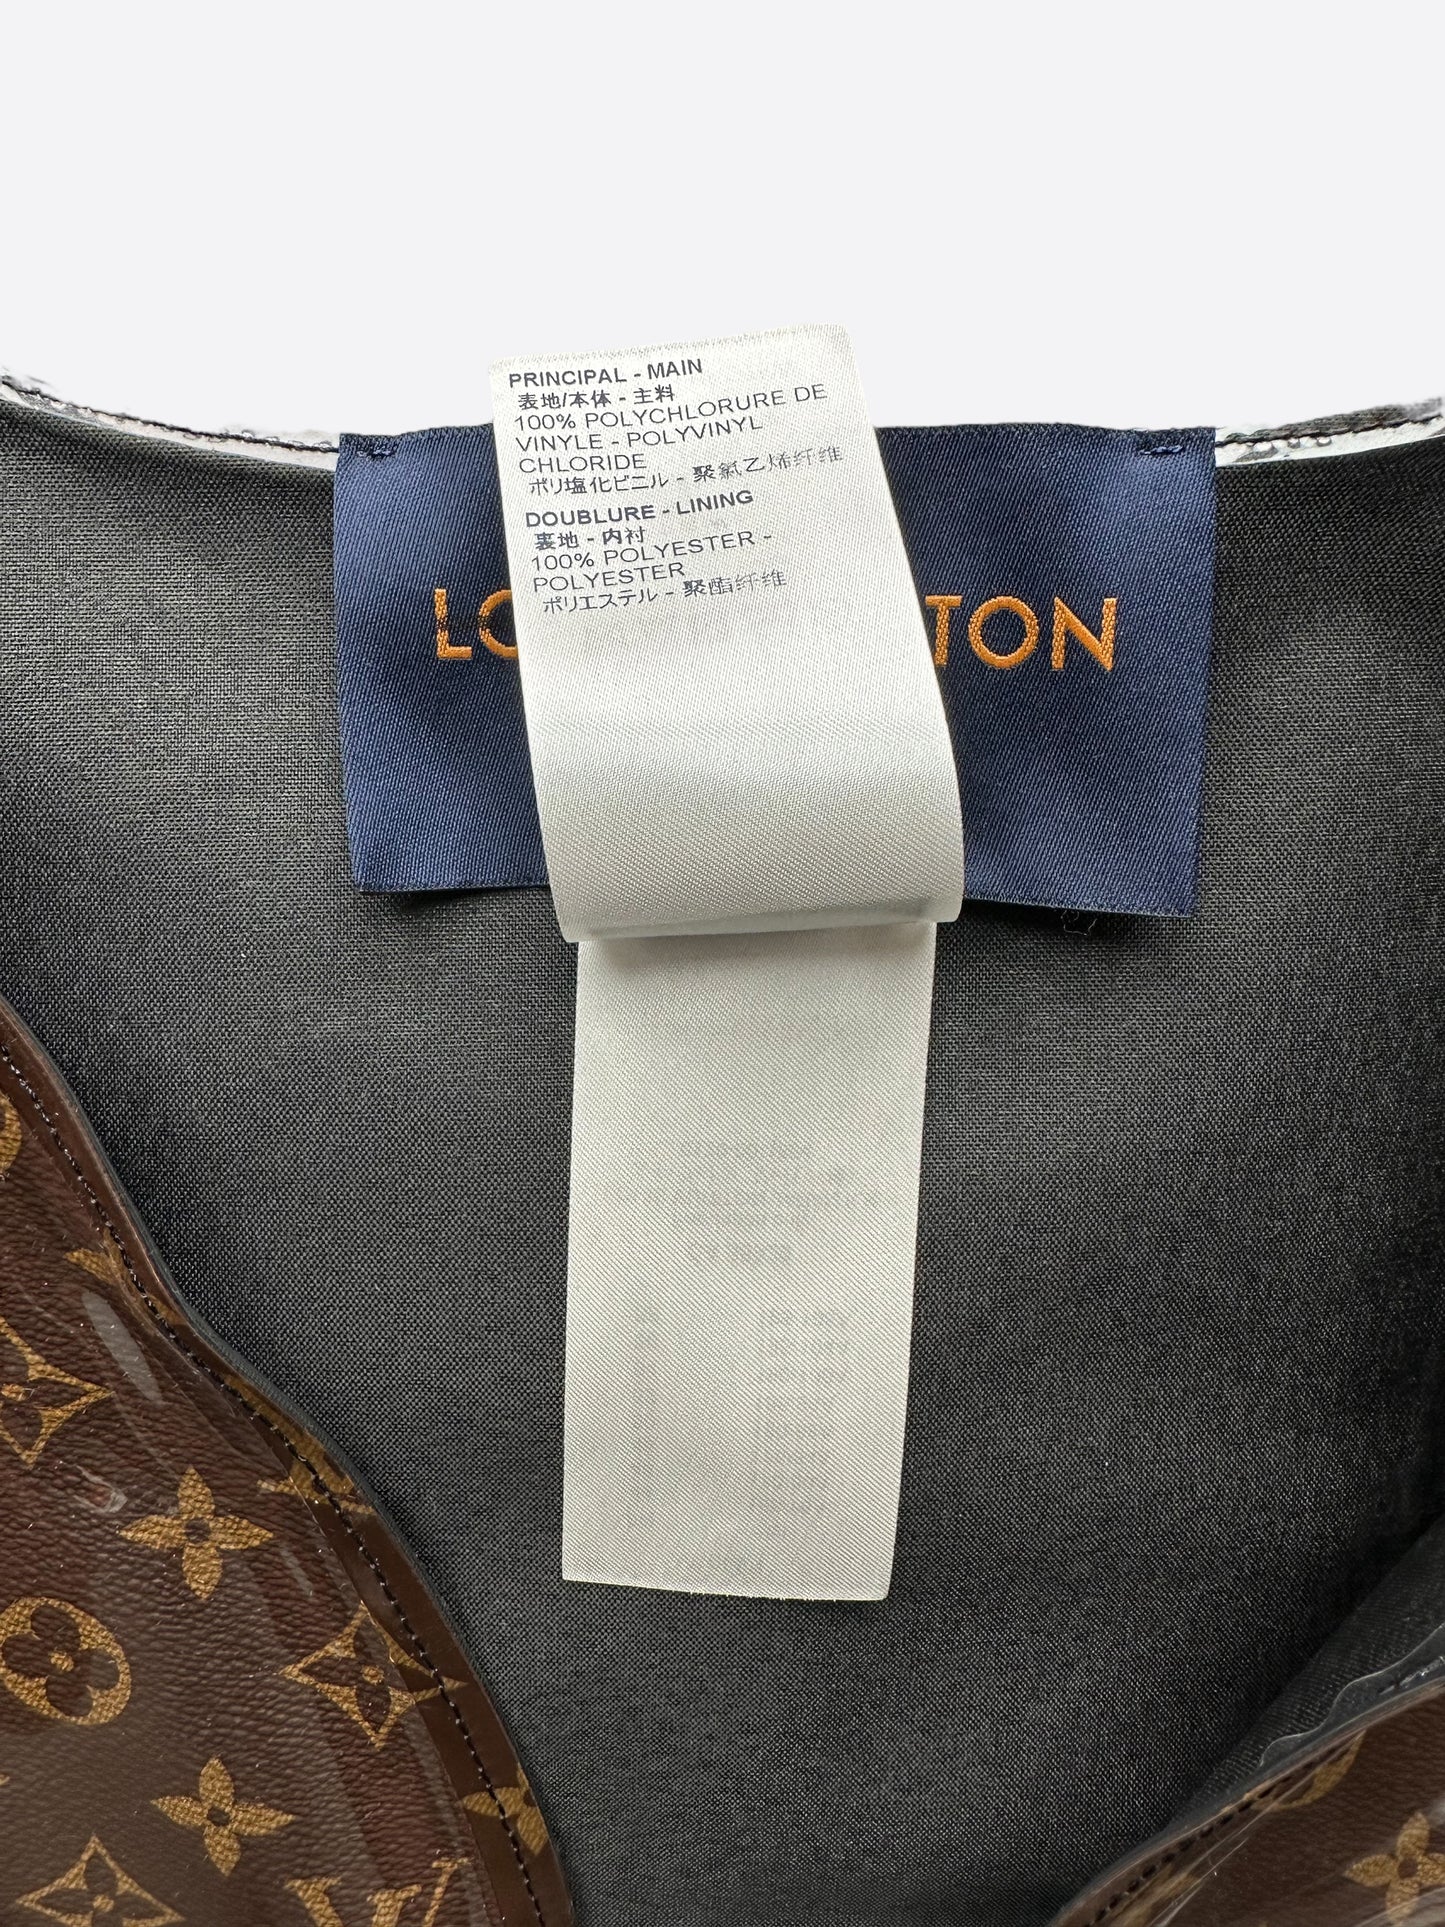 Louis Vuitton Louis Vuitton Monogram Inflatable Jacket